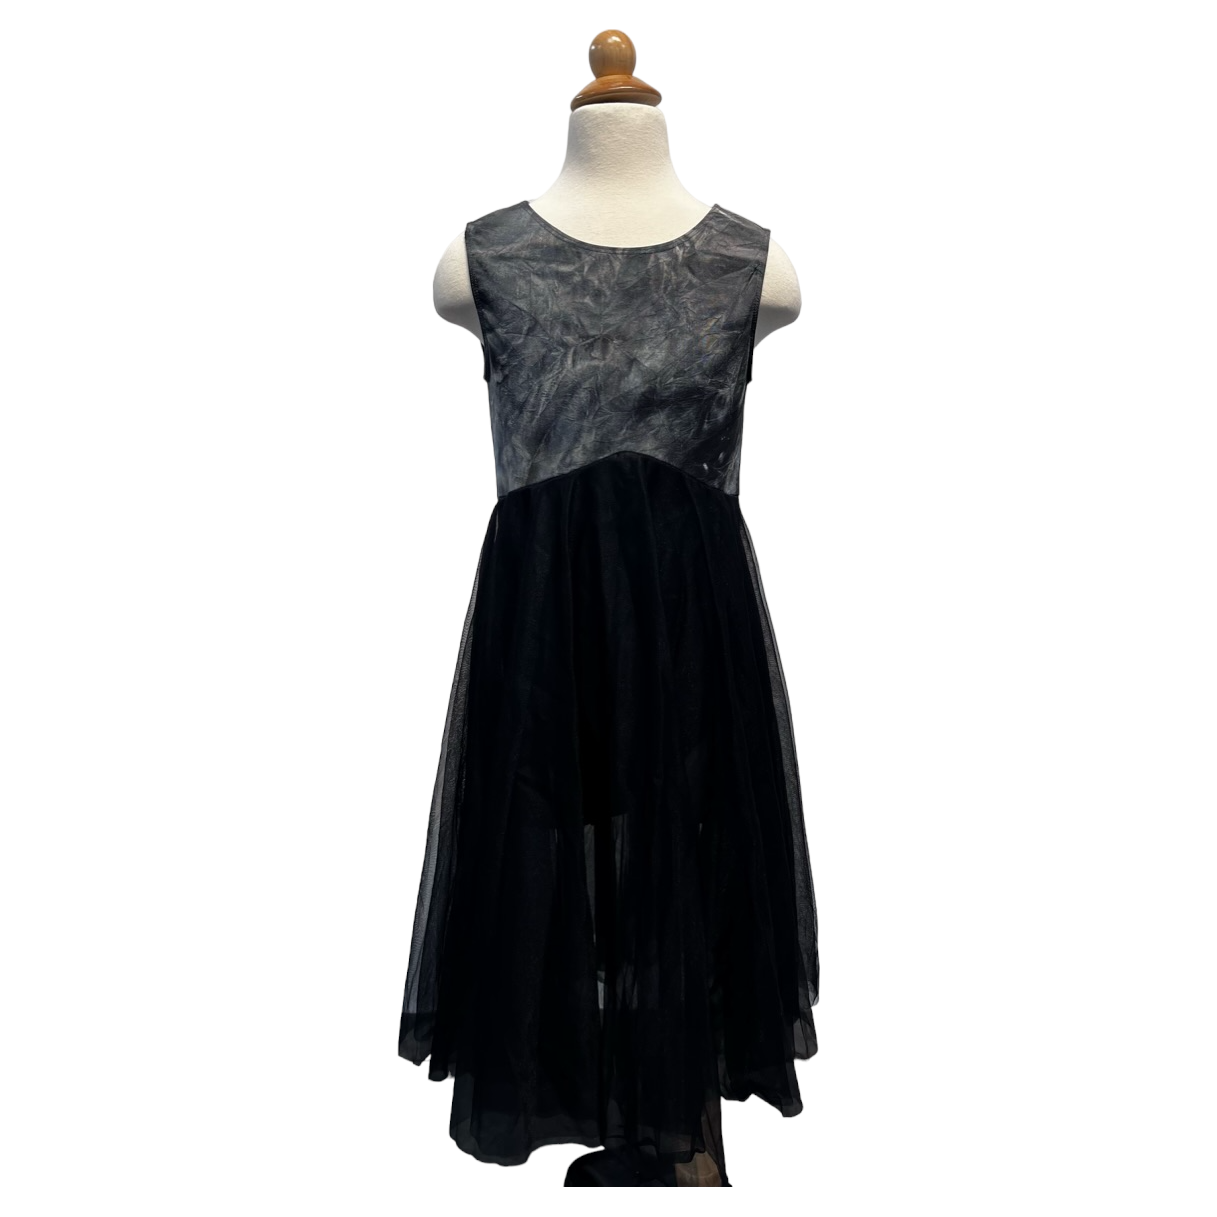 Lyrical Black and Grey Dress